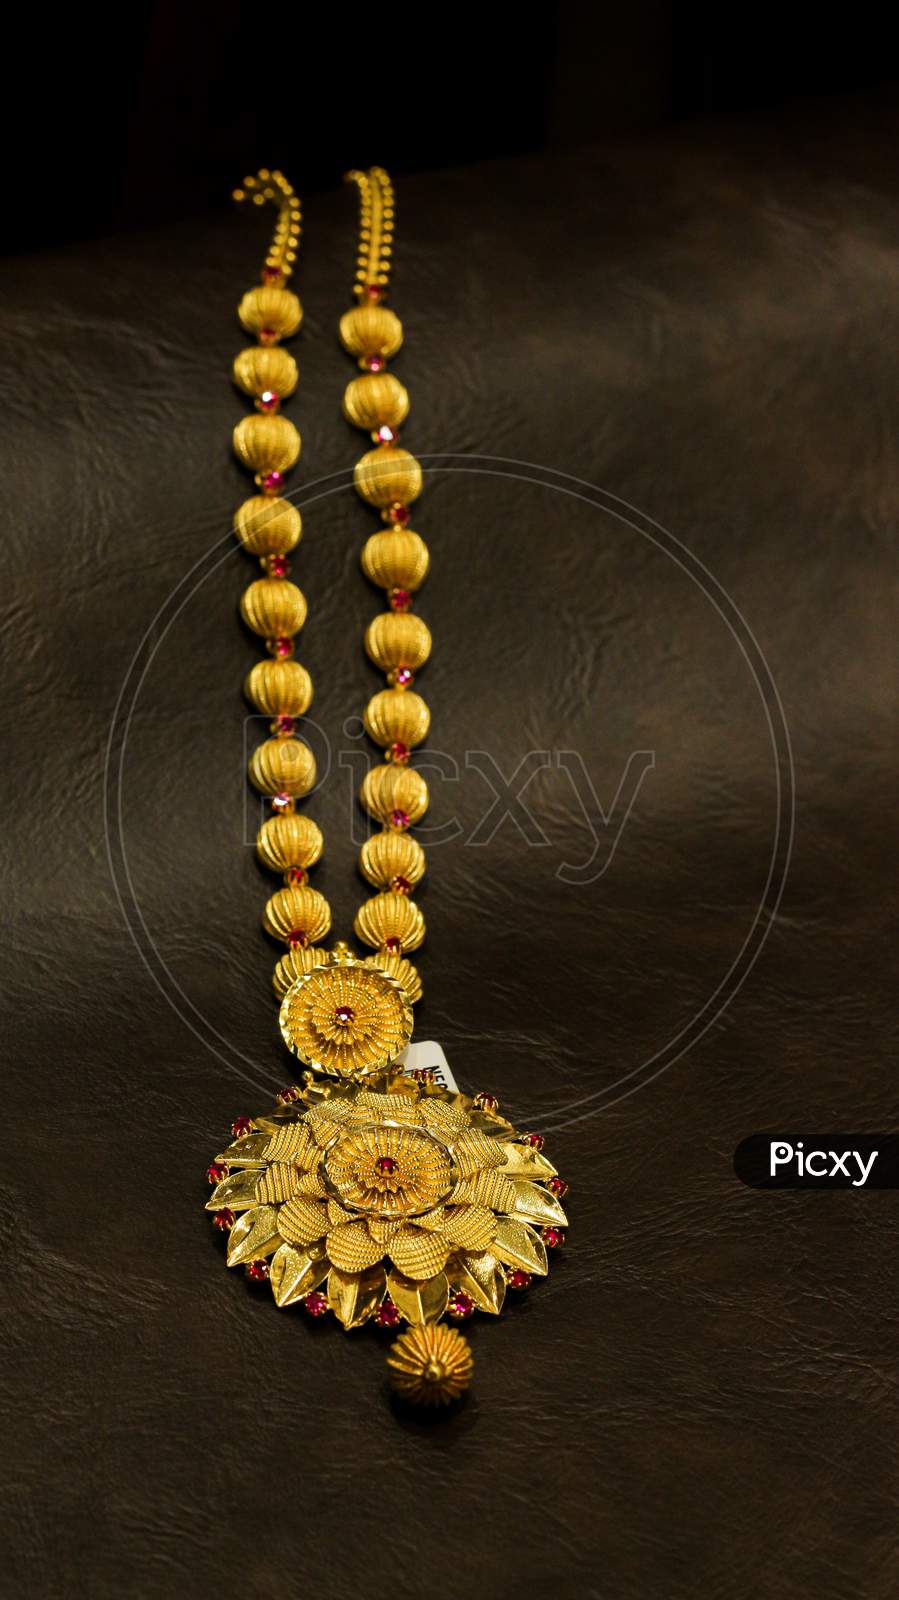 Image of Gold ornaments wallpaper jewellery kerala styleGO425992Picxy